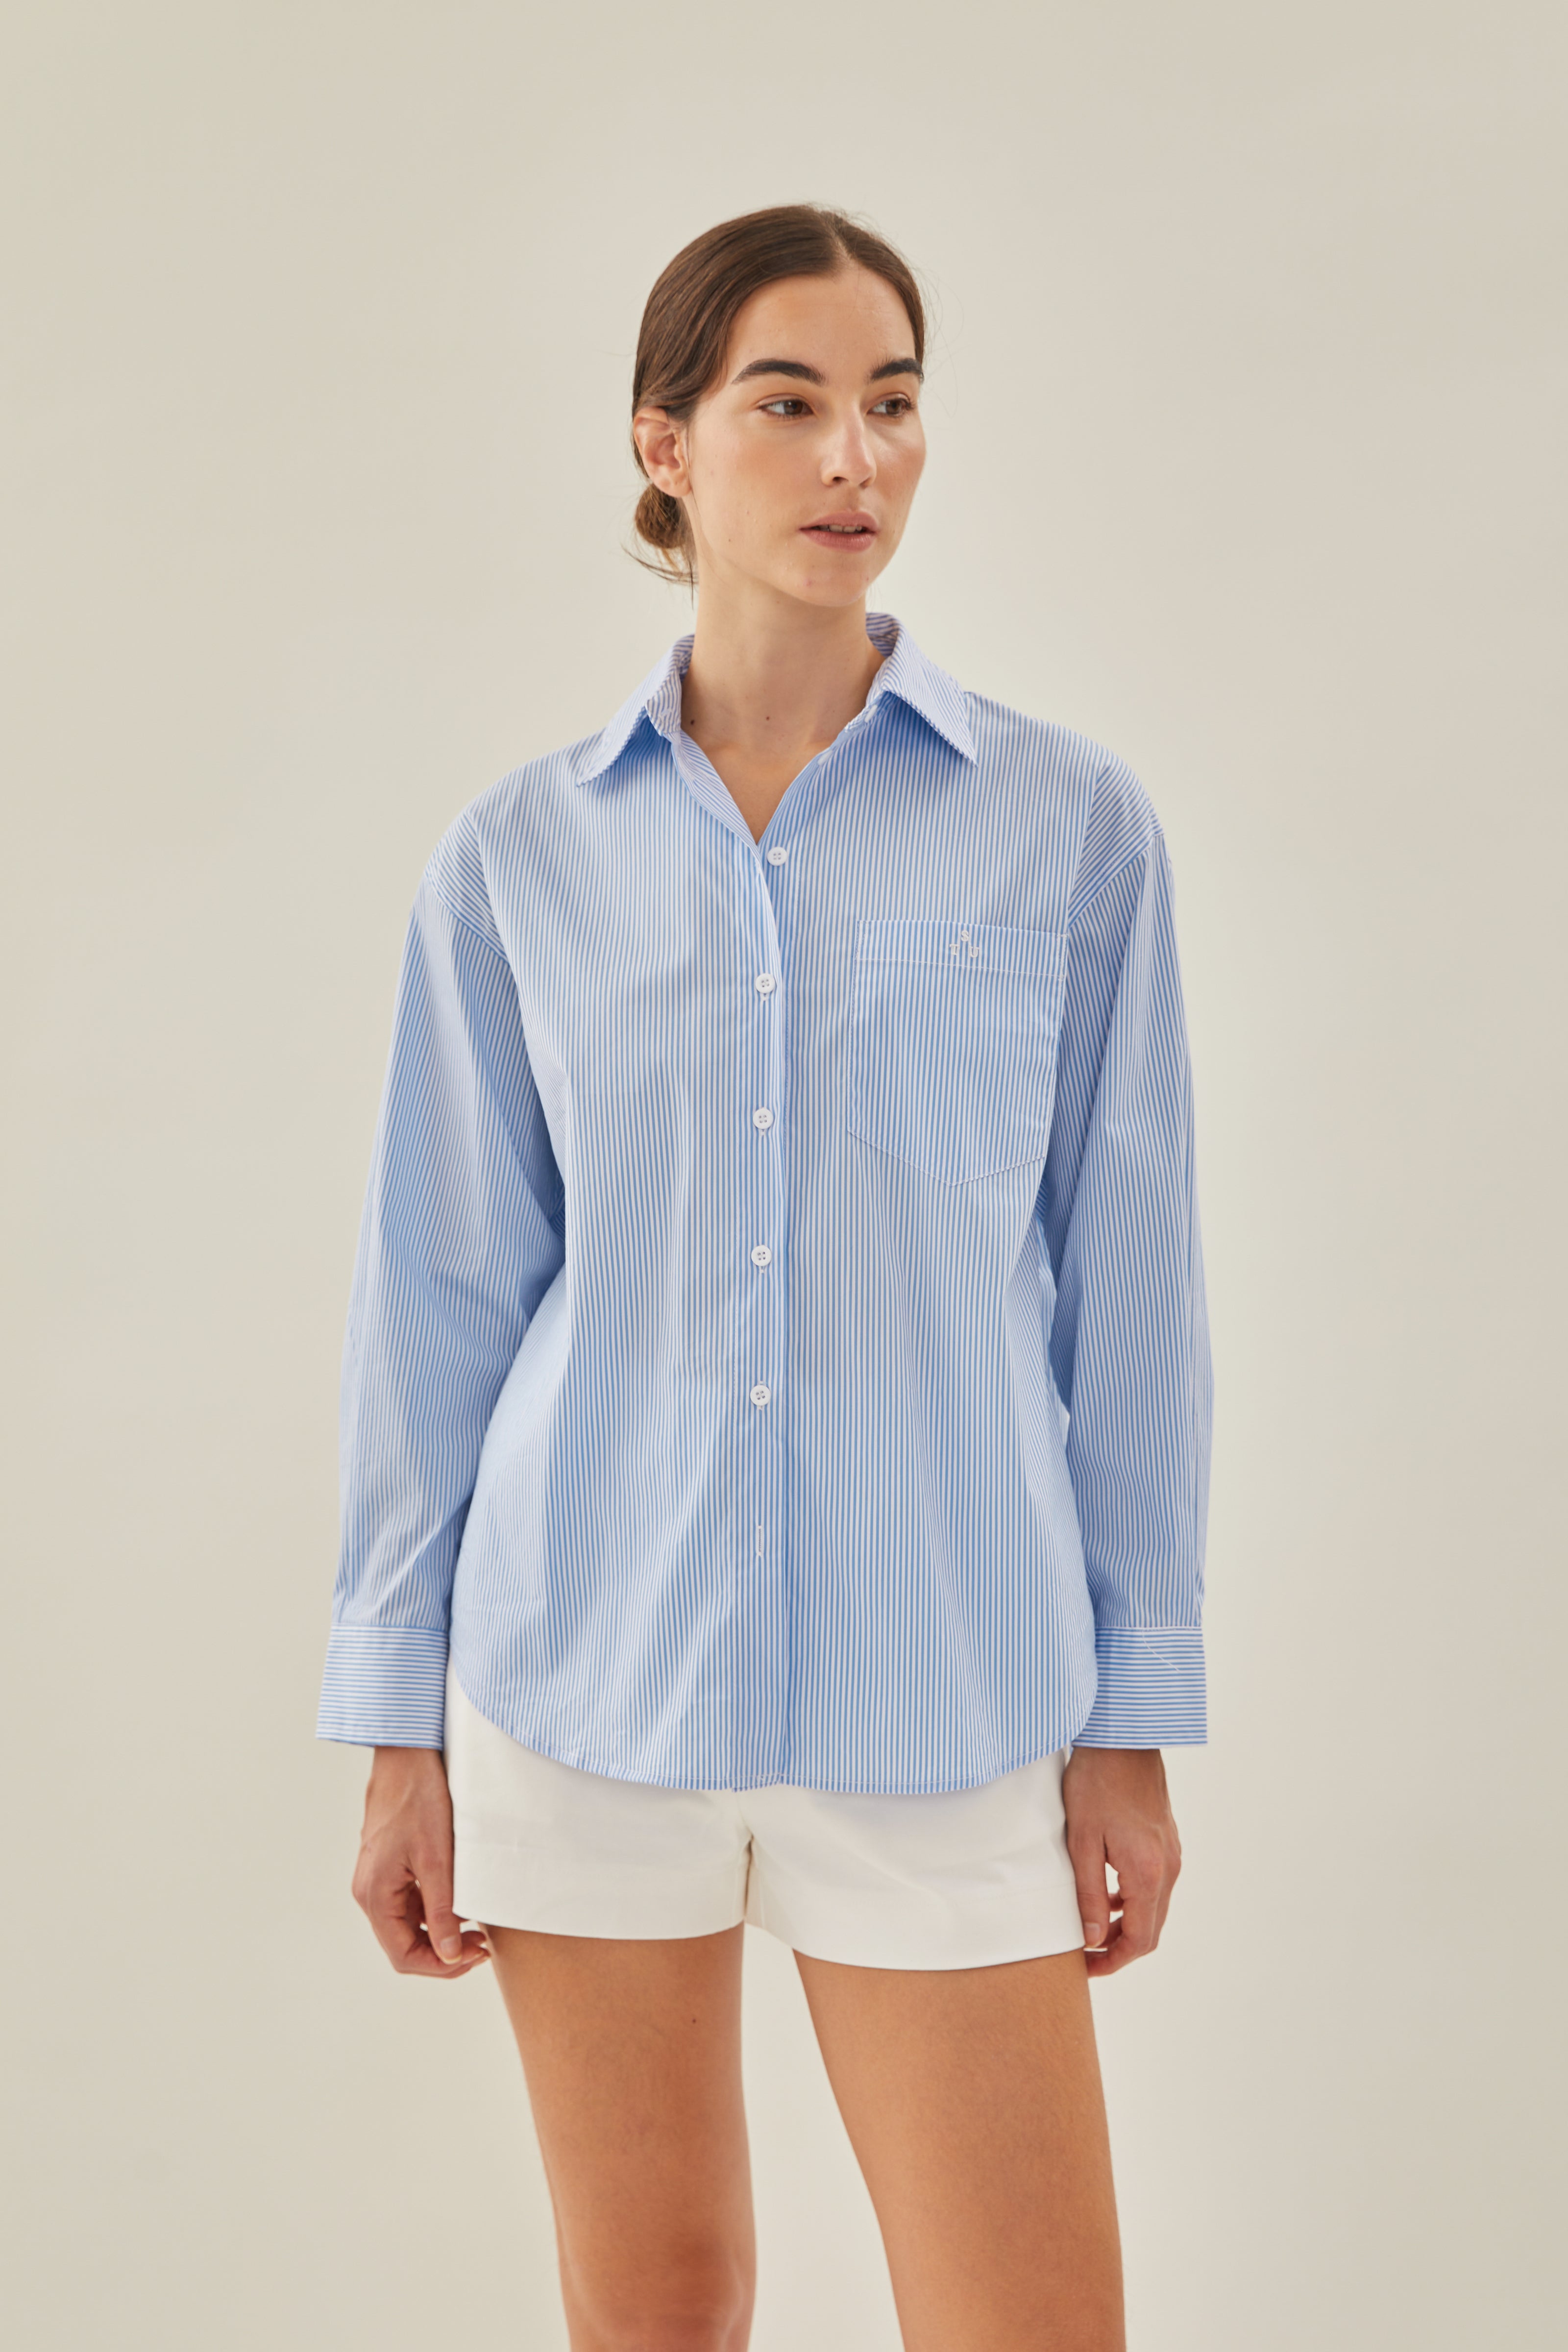 STUDIOS Pocket Shirt in Stripe Blue